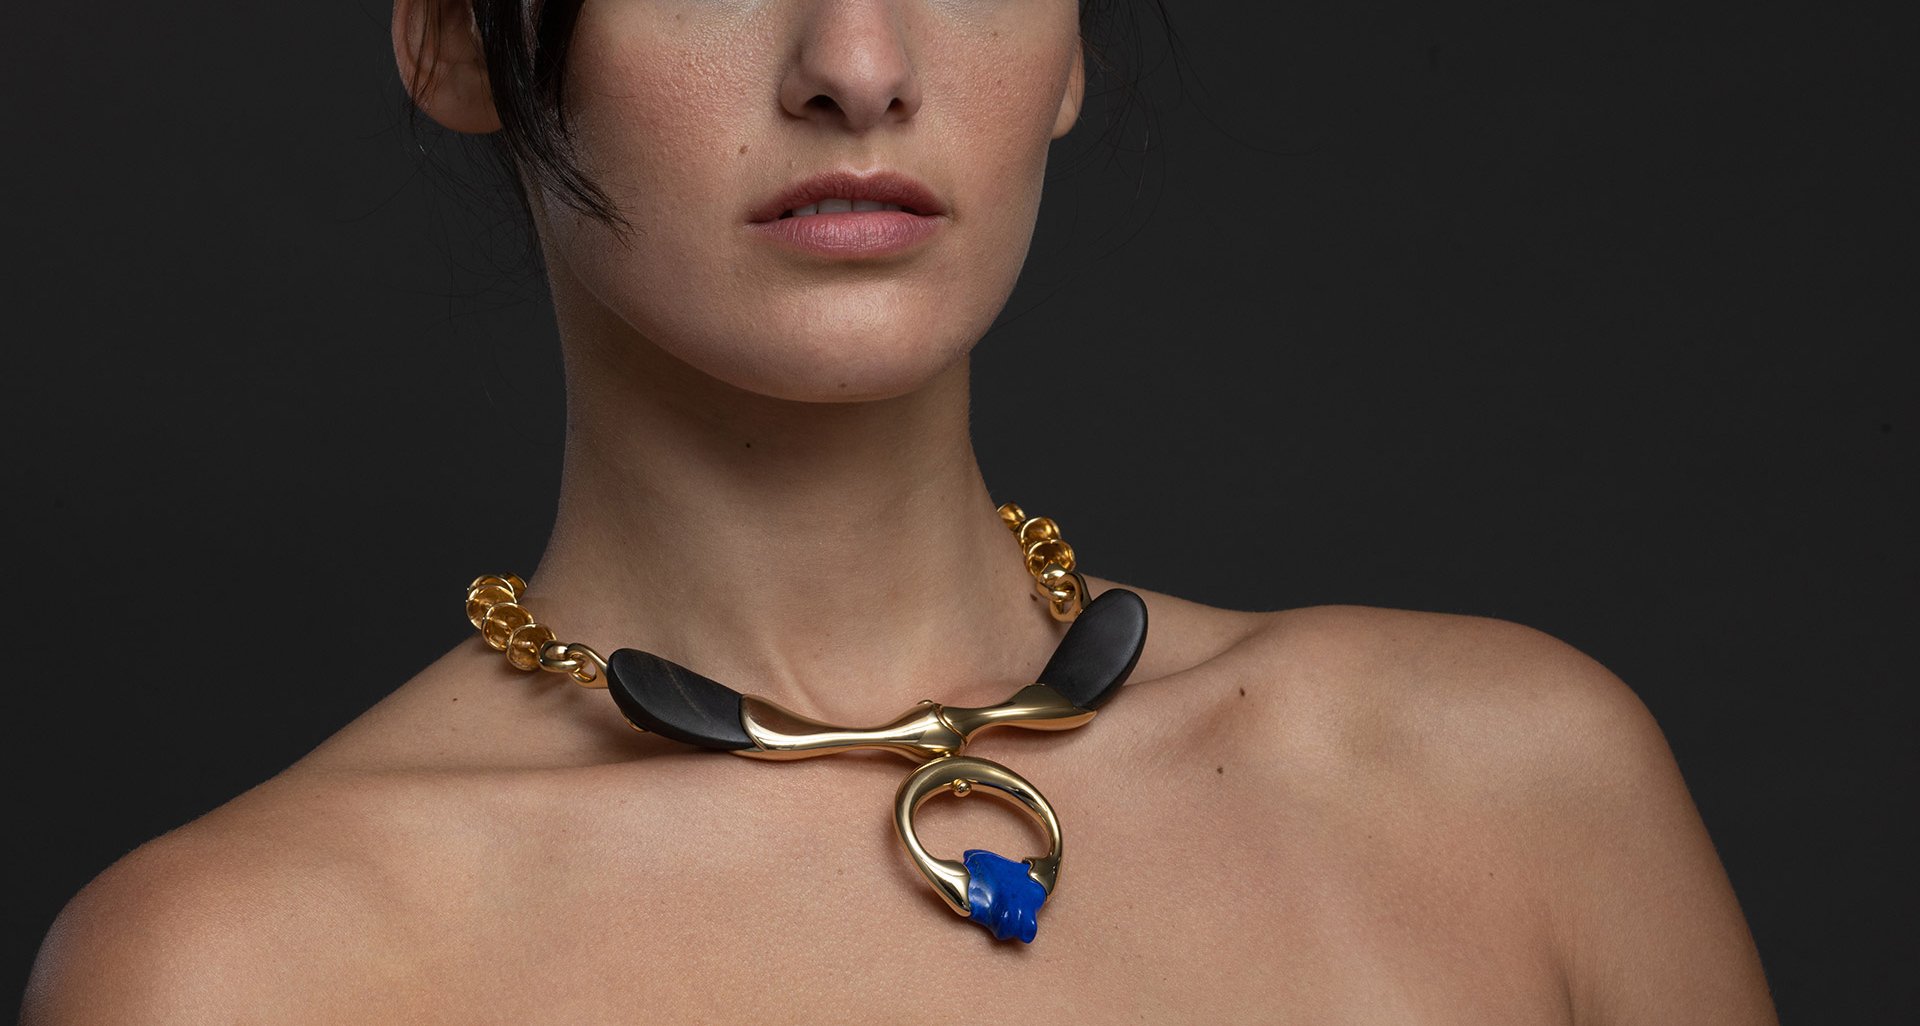 PLASTIC-egypt-necklaces-collection-julio-martinez-barnetche-marion-friedmann-gallery-LR-egypt120-cut.jpg